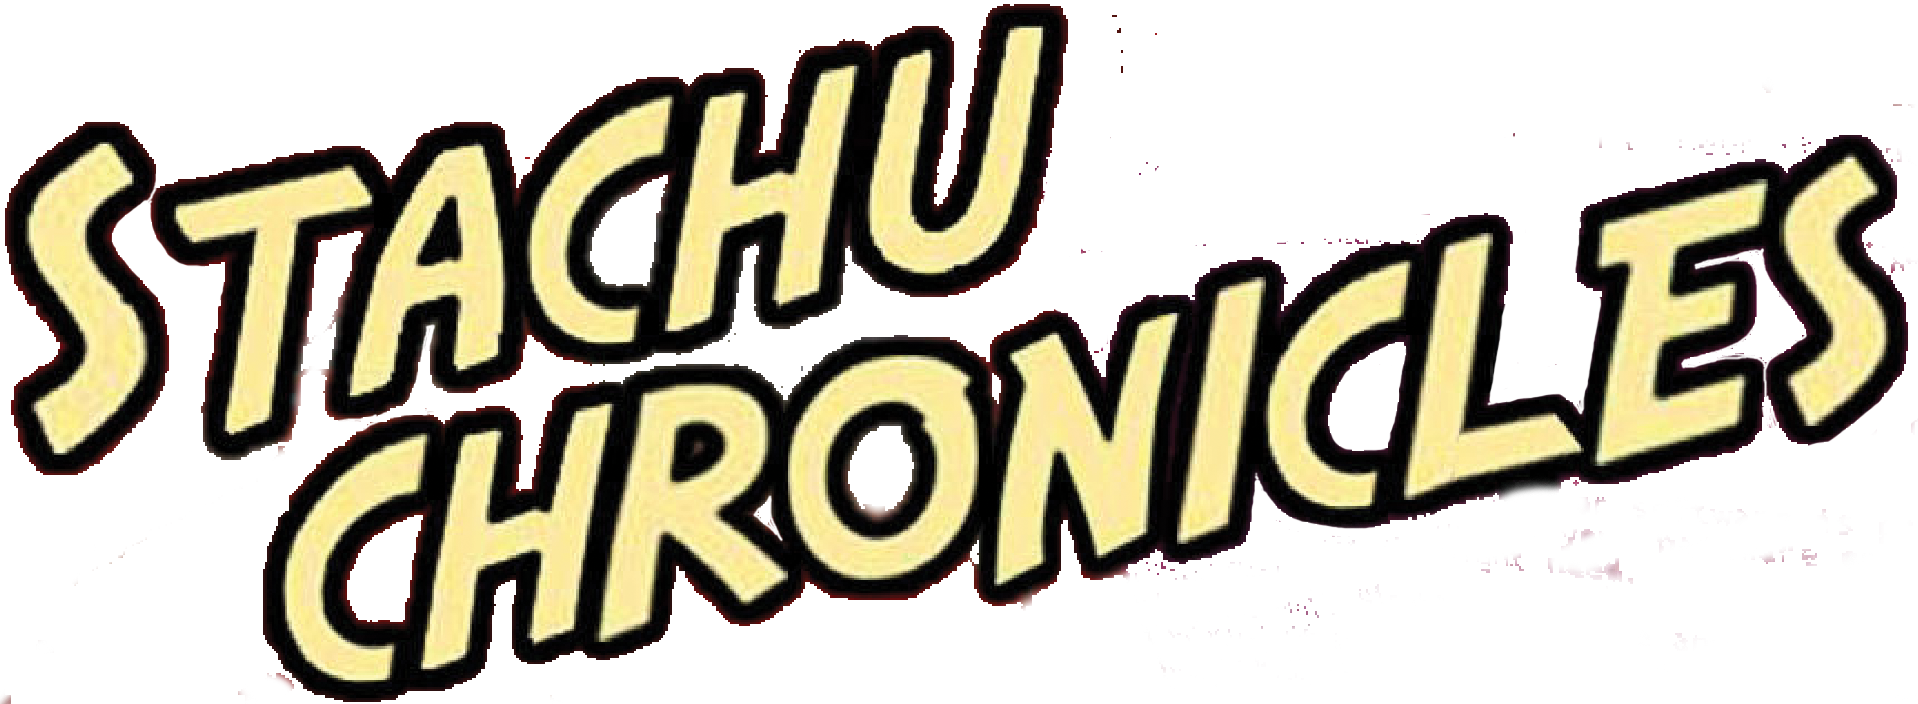 Neuroshima Hex - Stachu Chronicles